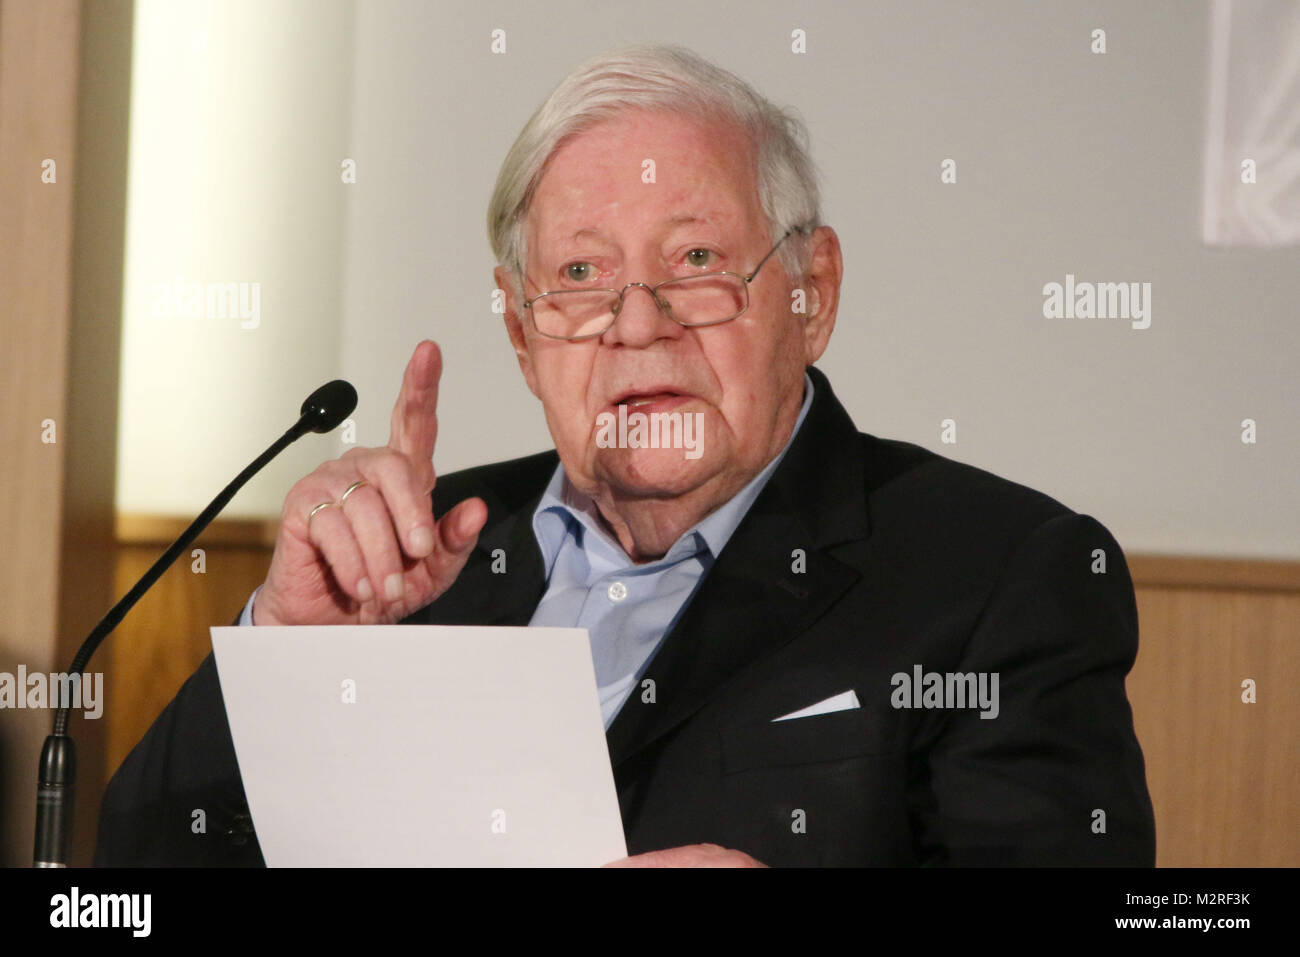 Helmut Schmidt, Verleihung des Gustav-Stresemann-Preises un Bundeskanzler a.D. Helmut Schmidt , A.F.u.A.M Freimaurer Grossloge c. Deutschland, Hambourg, 26.01.2015 Banque D'Images